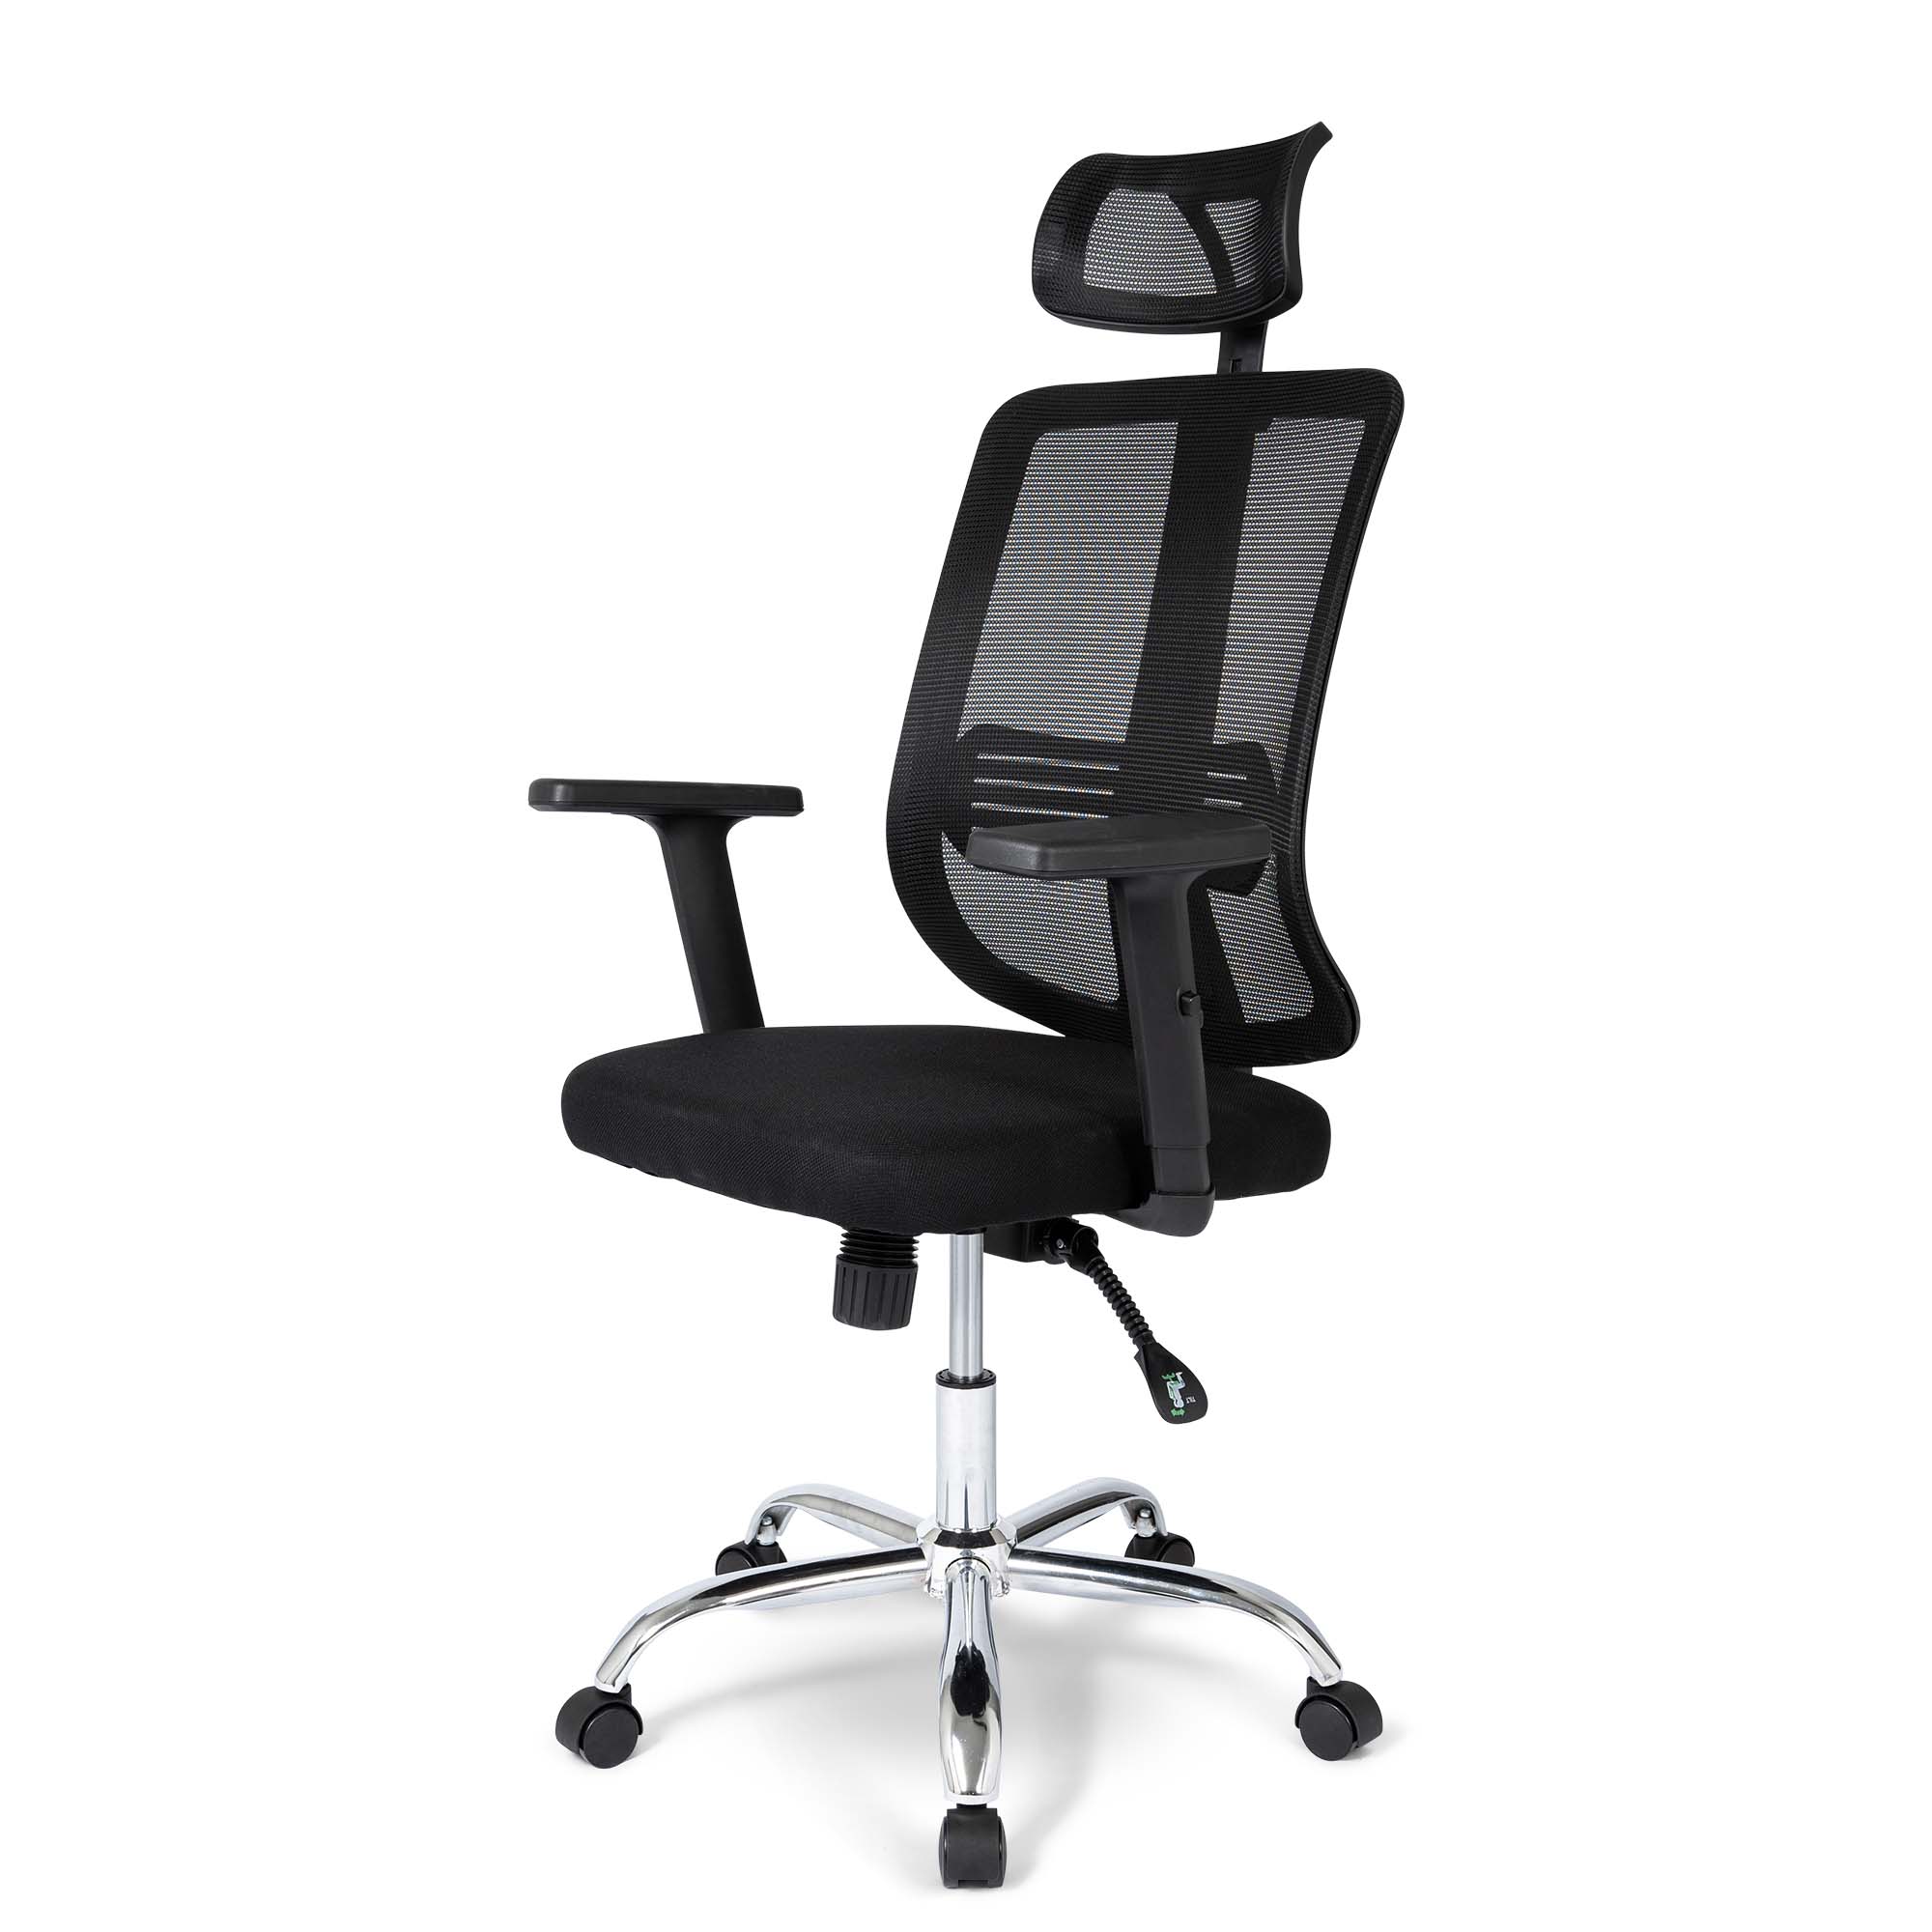 Ergodu Office Chair with Adjustable Armrests